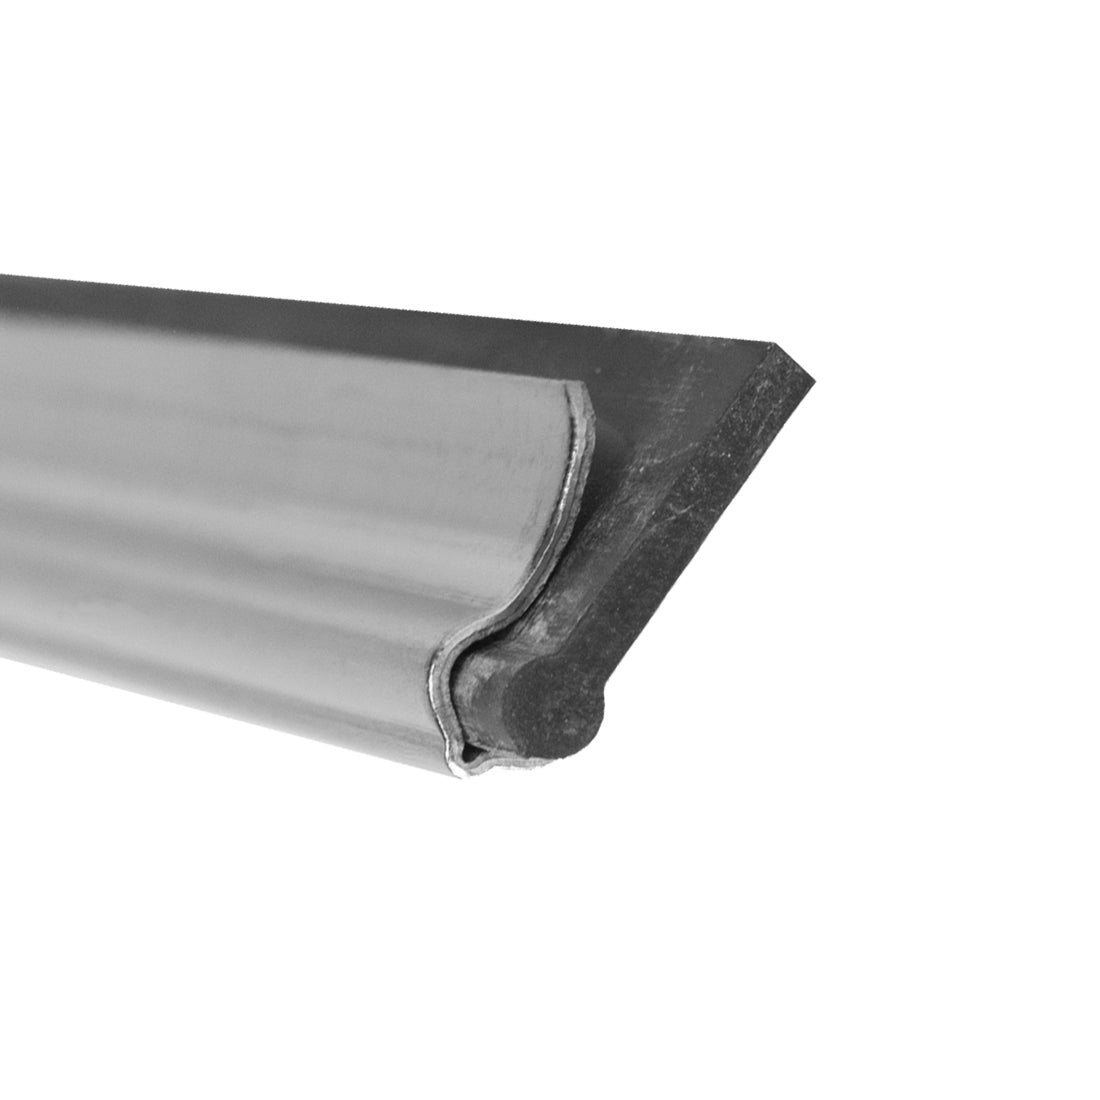 Pulex TechnoLite Stainless Steel Squeegee Channel Rubber View